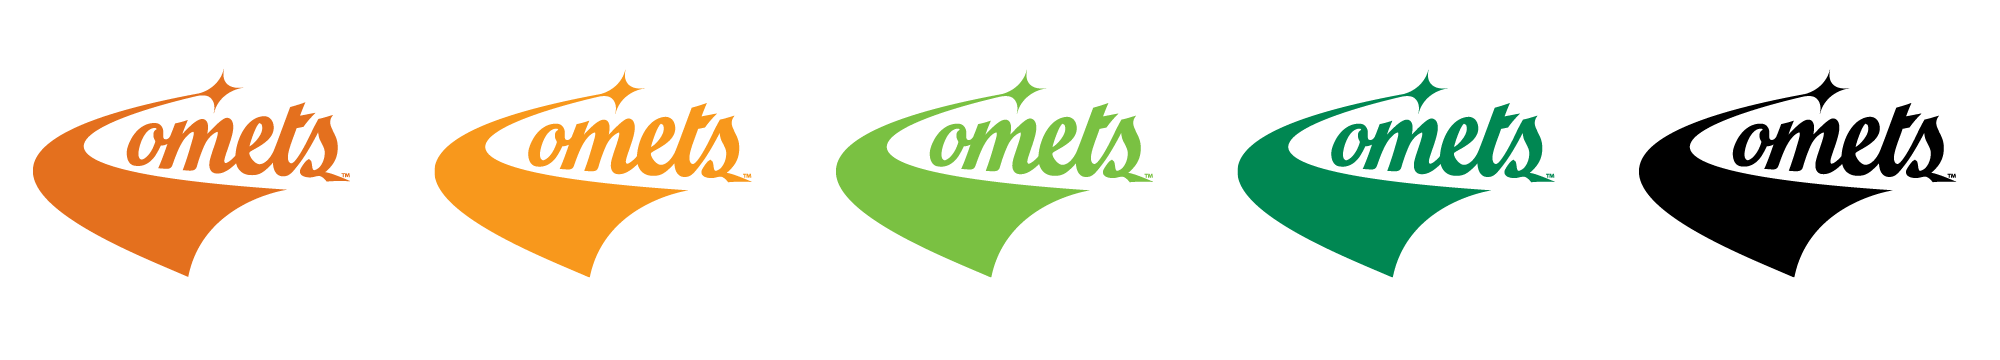 Utd Comets Logo - Specialty Logos Standards University of Texas